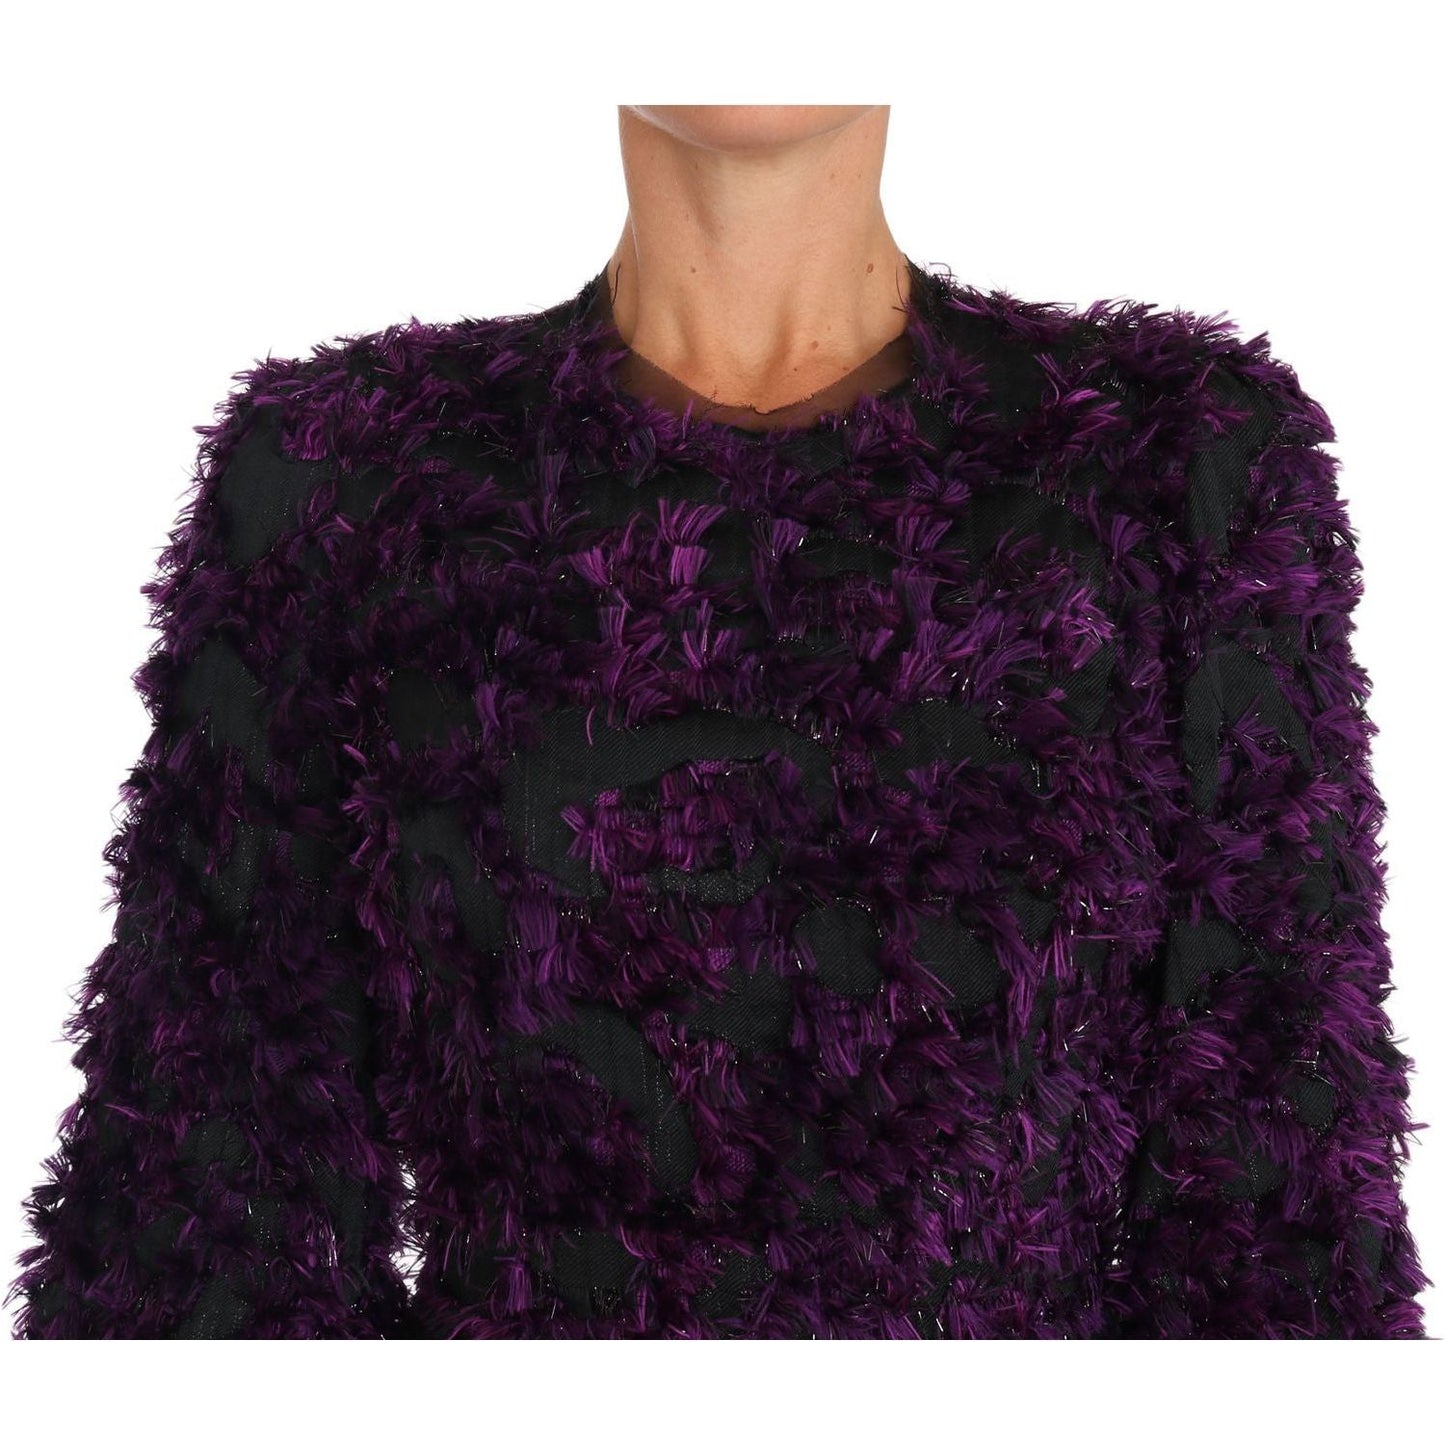 Dolce & Gabbana Elegant Fringe Sheath Dress in Purple & Black purple-fringe-midi-sheath-dress